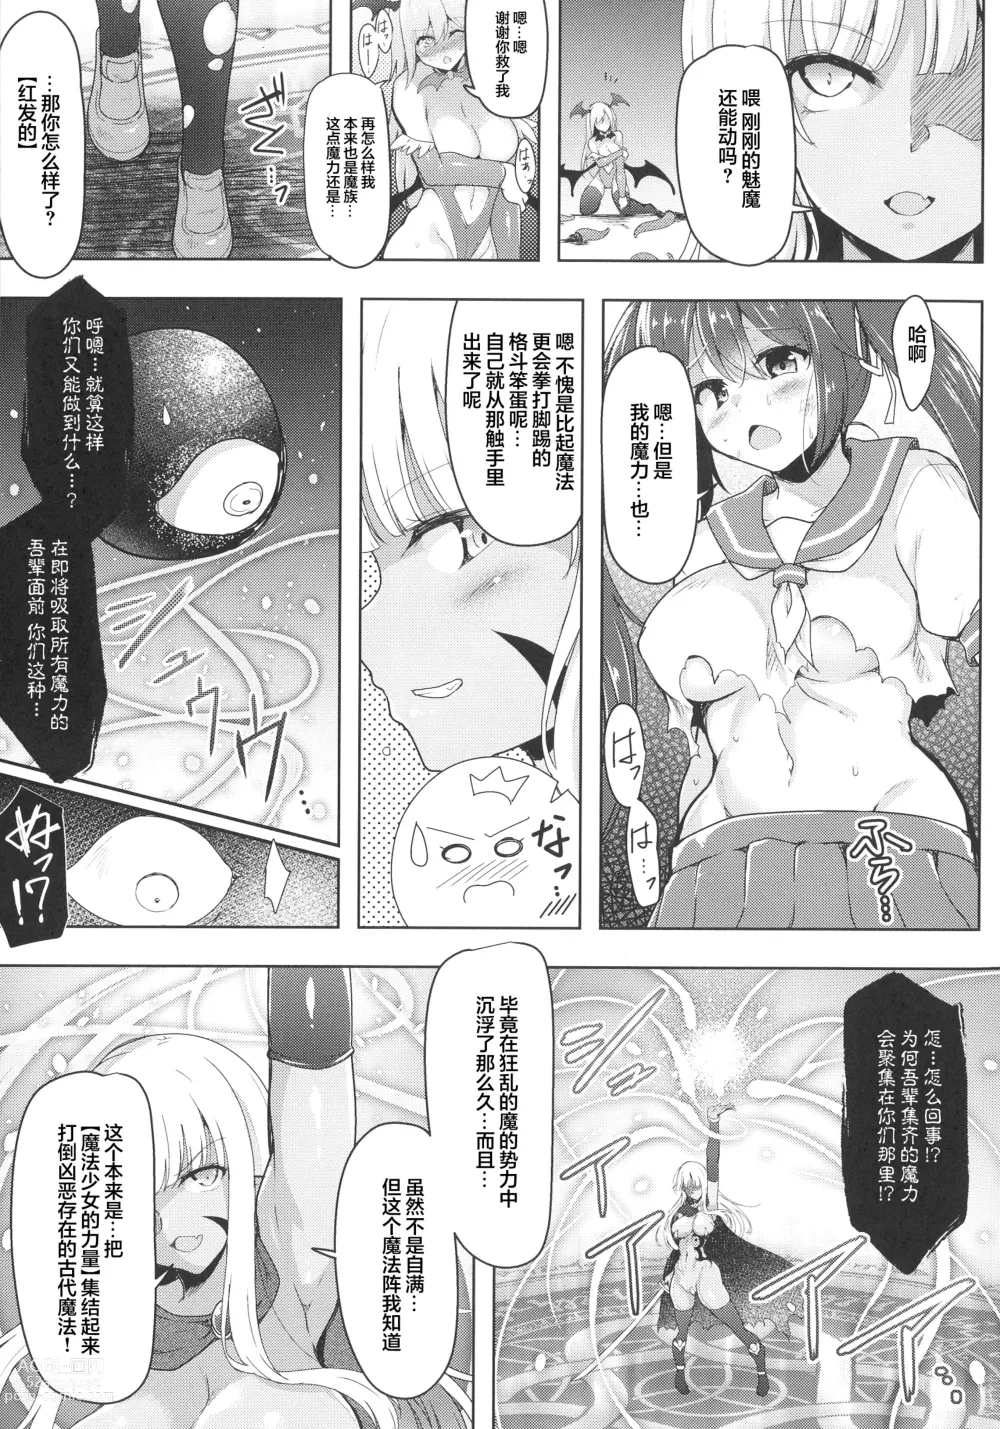 Page 67 of manga Futanari Mahou Shoujo Royale